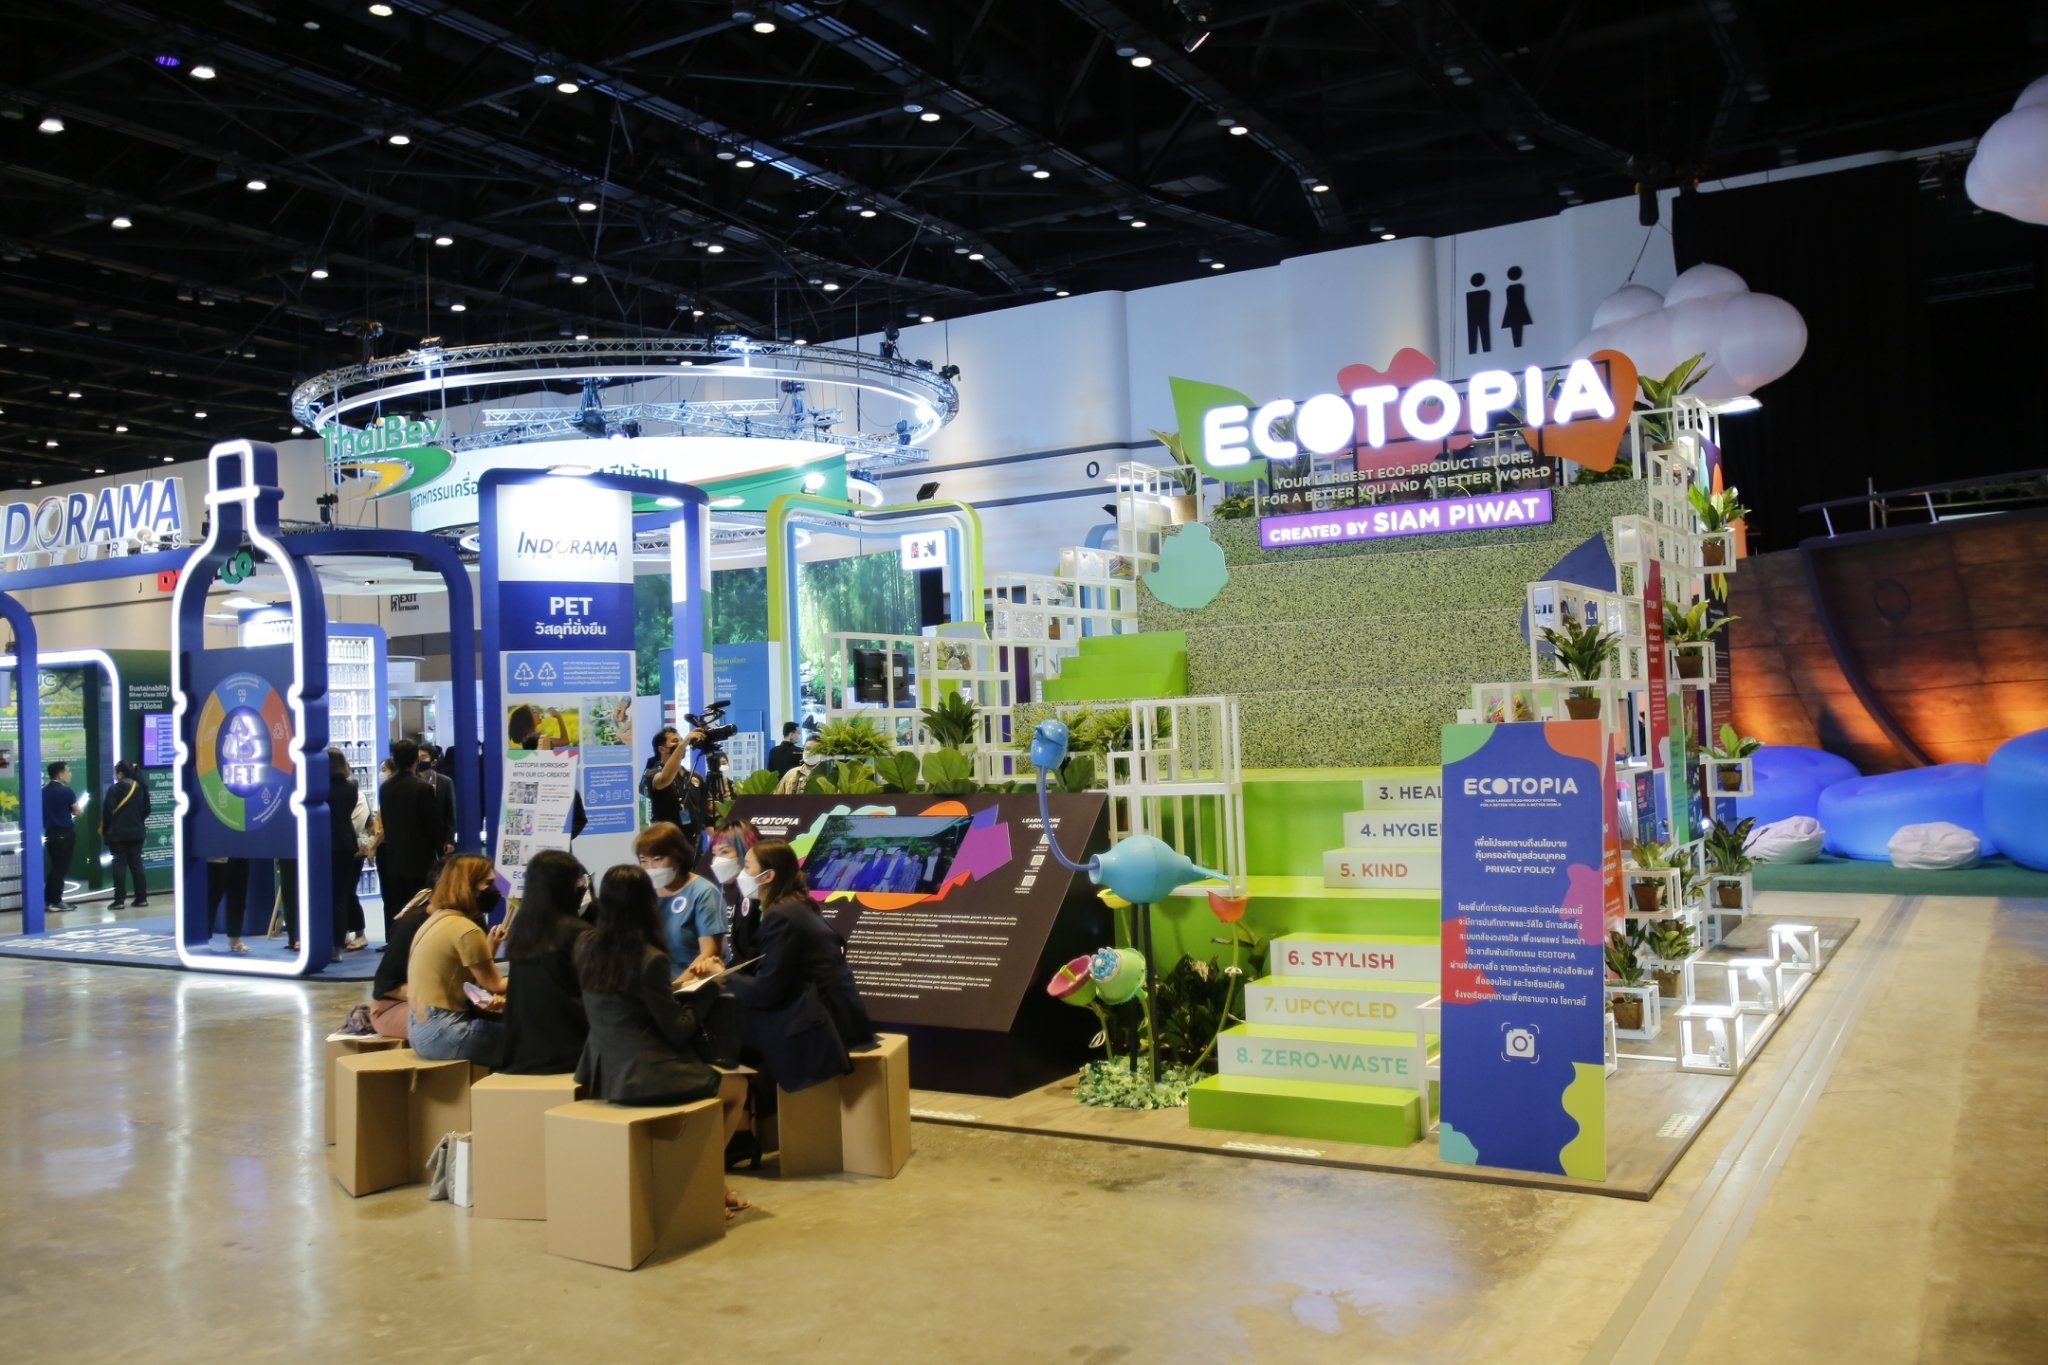 Ecotopia Booth